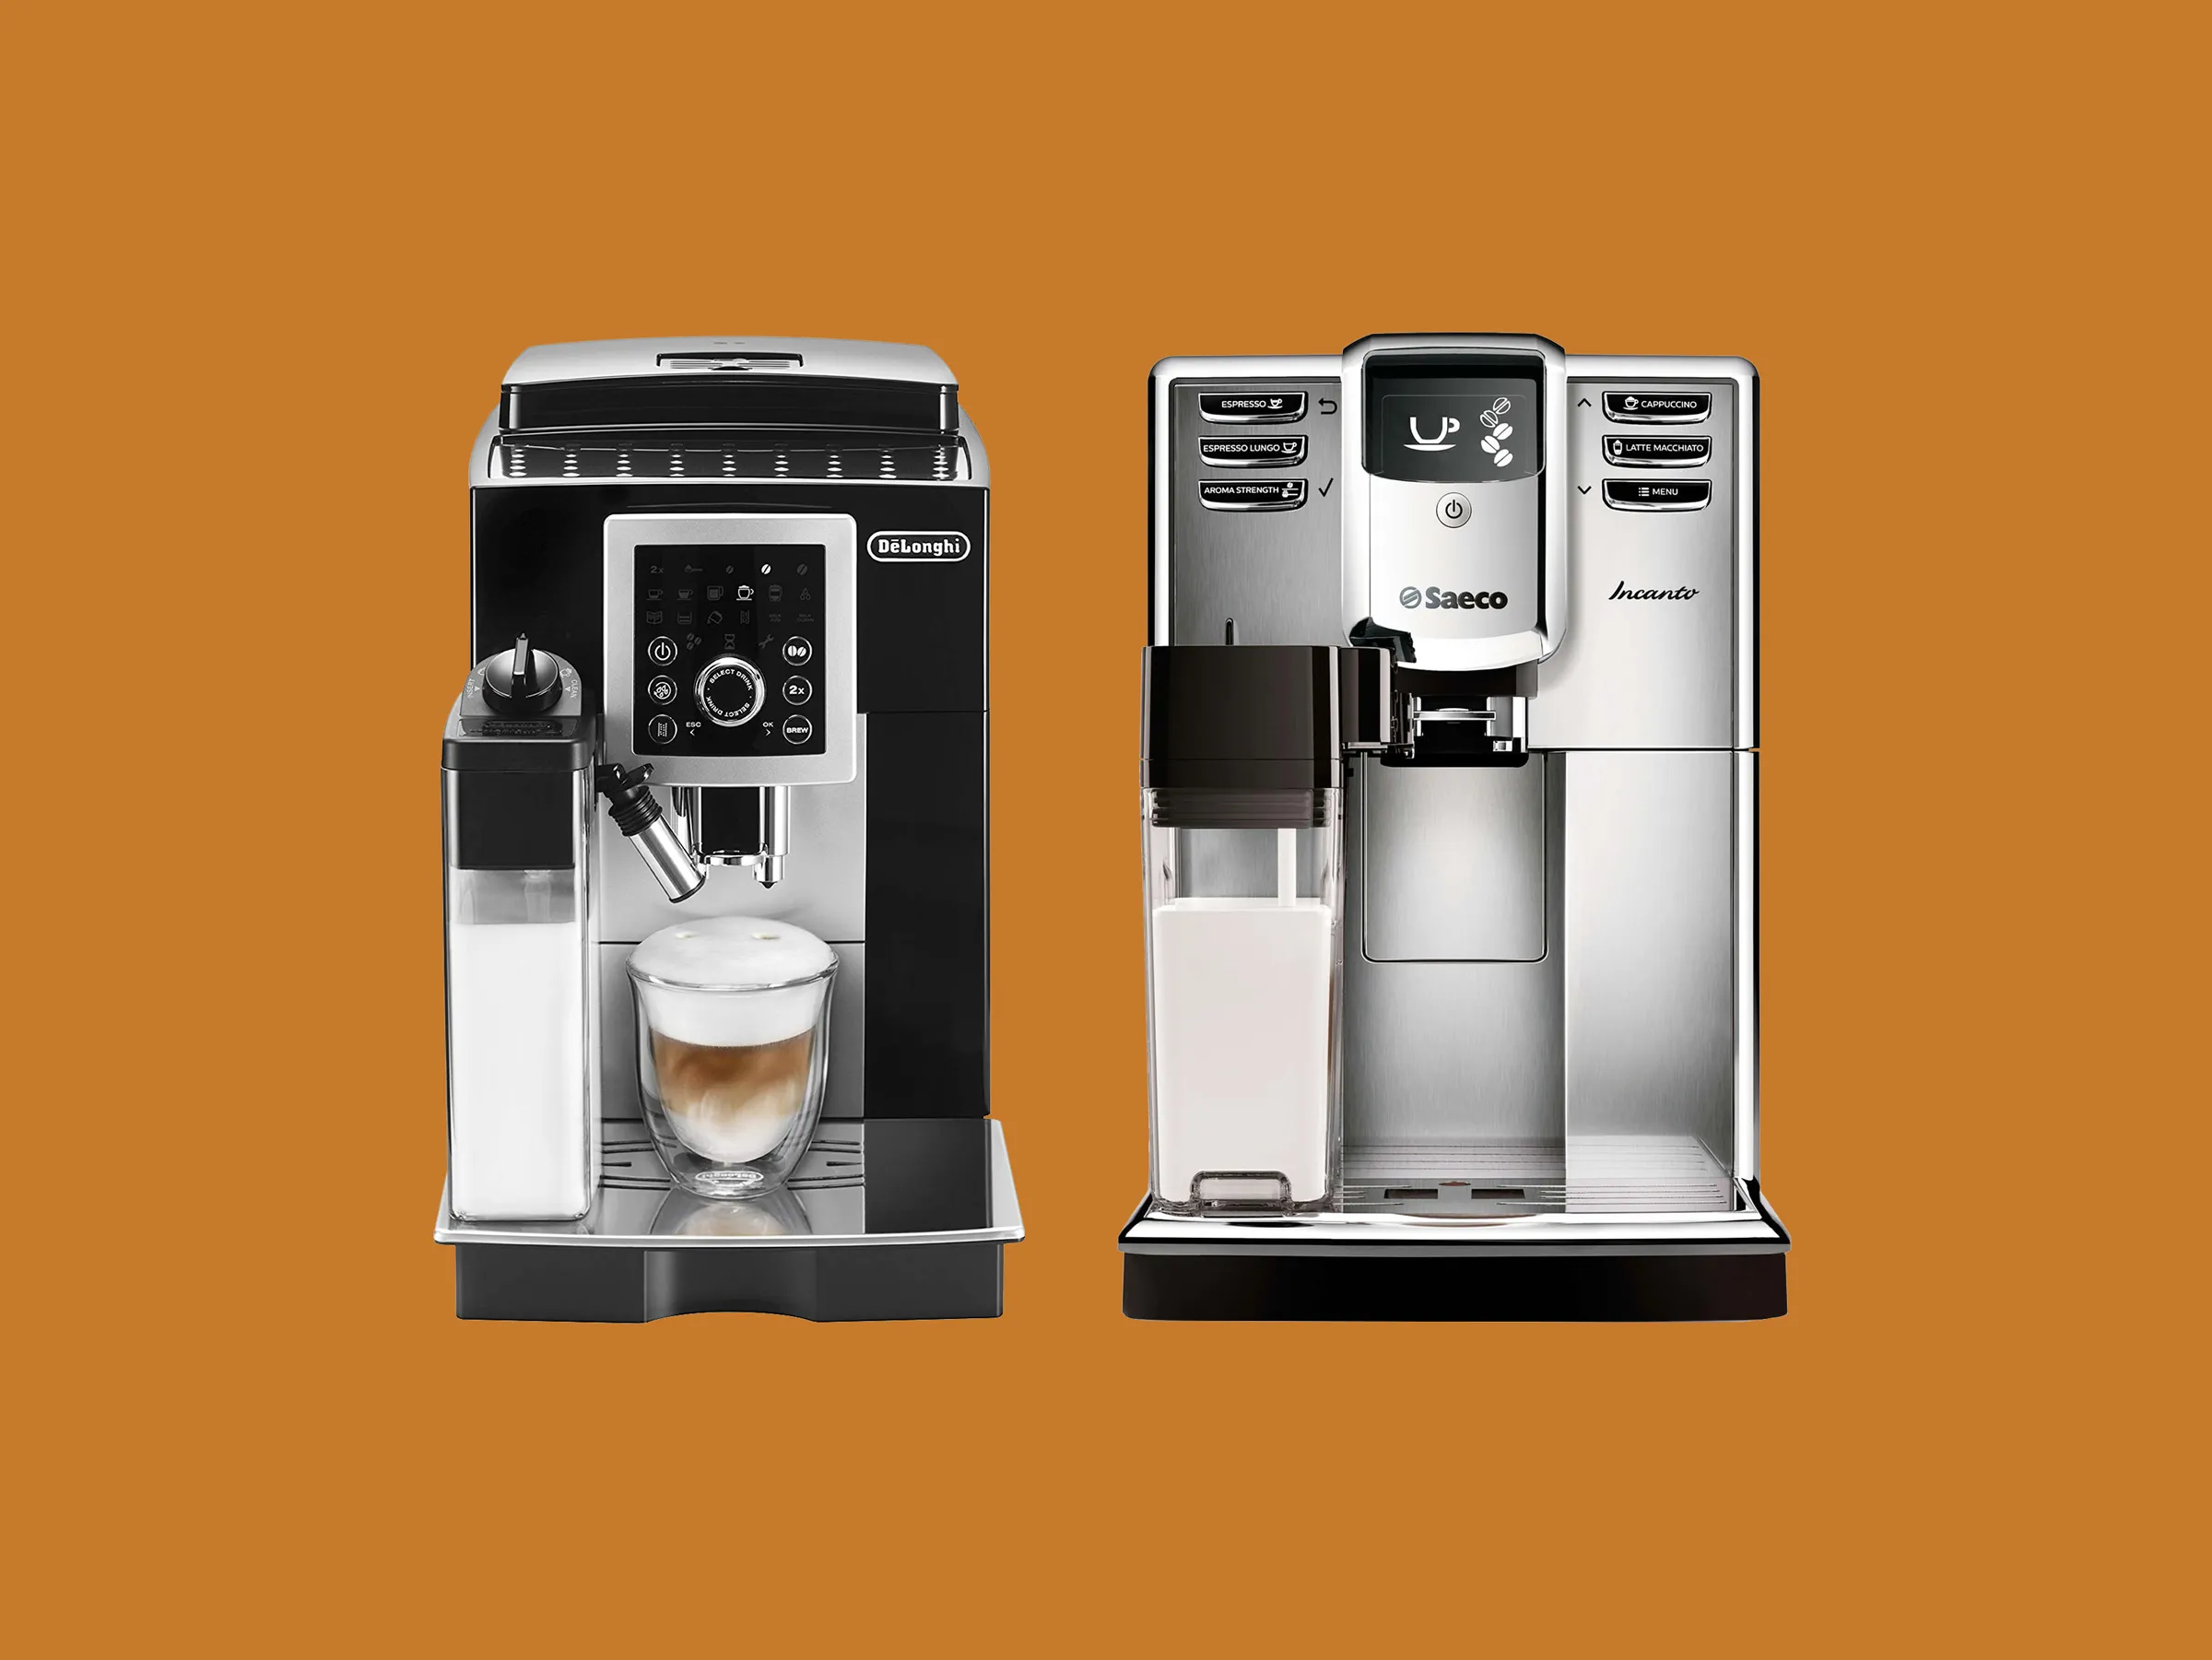 Zulay Kitchen White Magia Automatic Espresso Coffee Machine